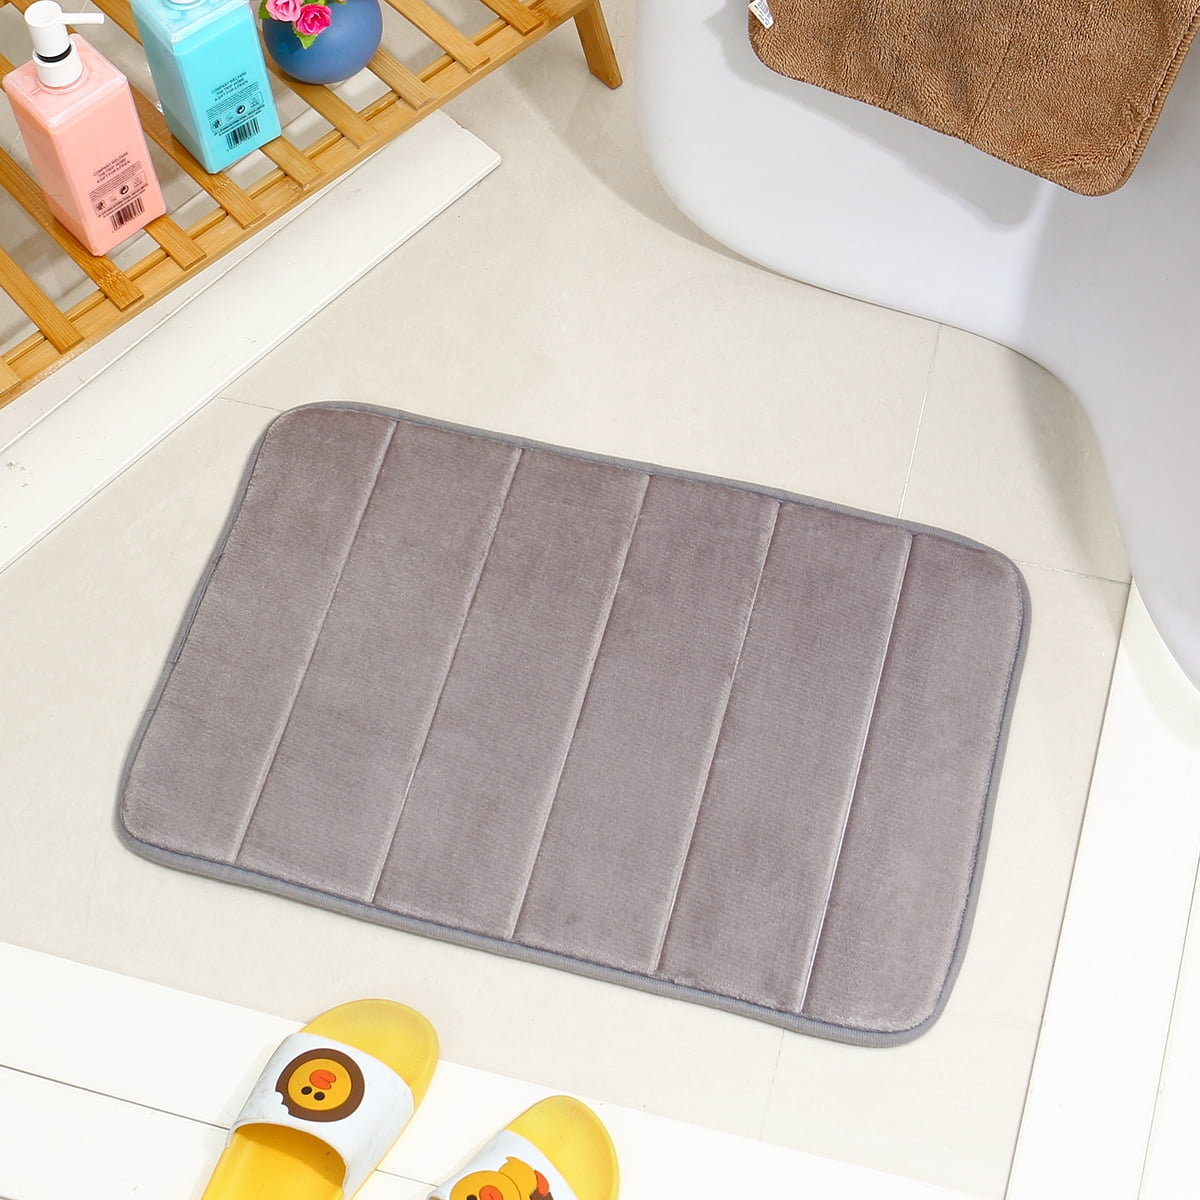 U-Shaped Contour Mat Toilet Lid Cover 20x31+16x20+16x18 T&H XHome Non-Slip Bath Rug Sets 3 Piece for Bathroom-Sky Lightning,Luxury Memory Foam Bathroom Mats